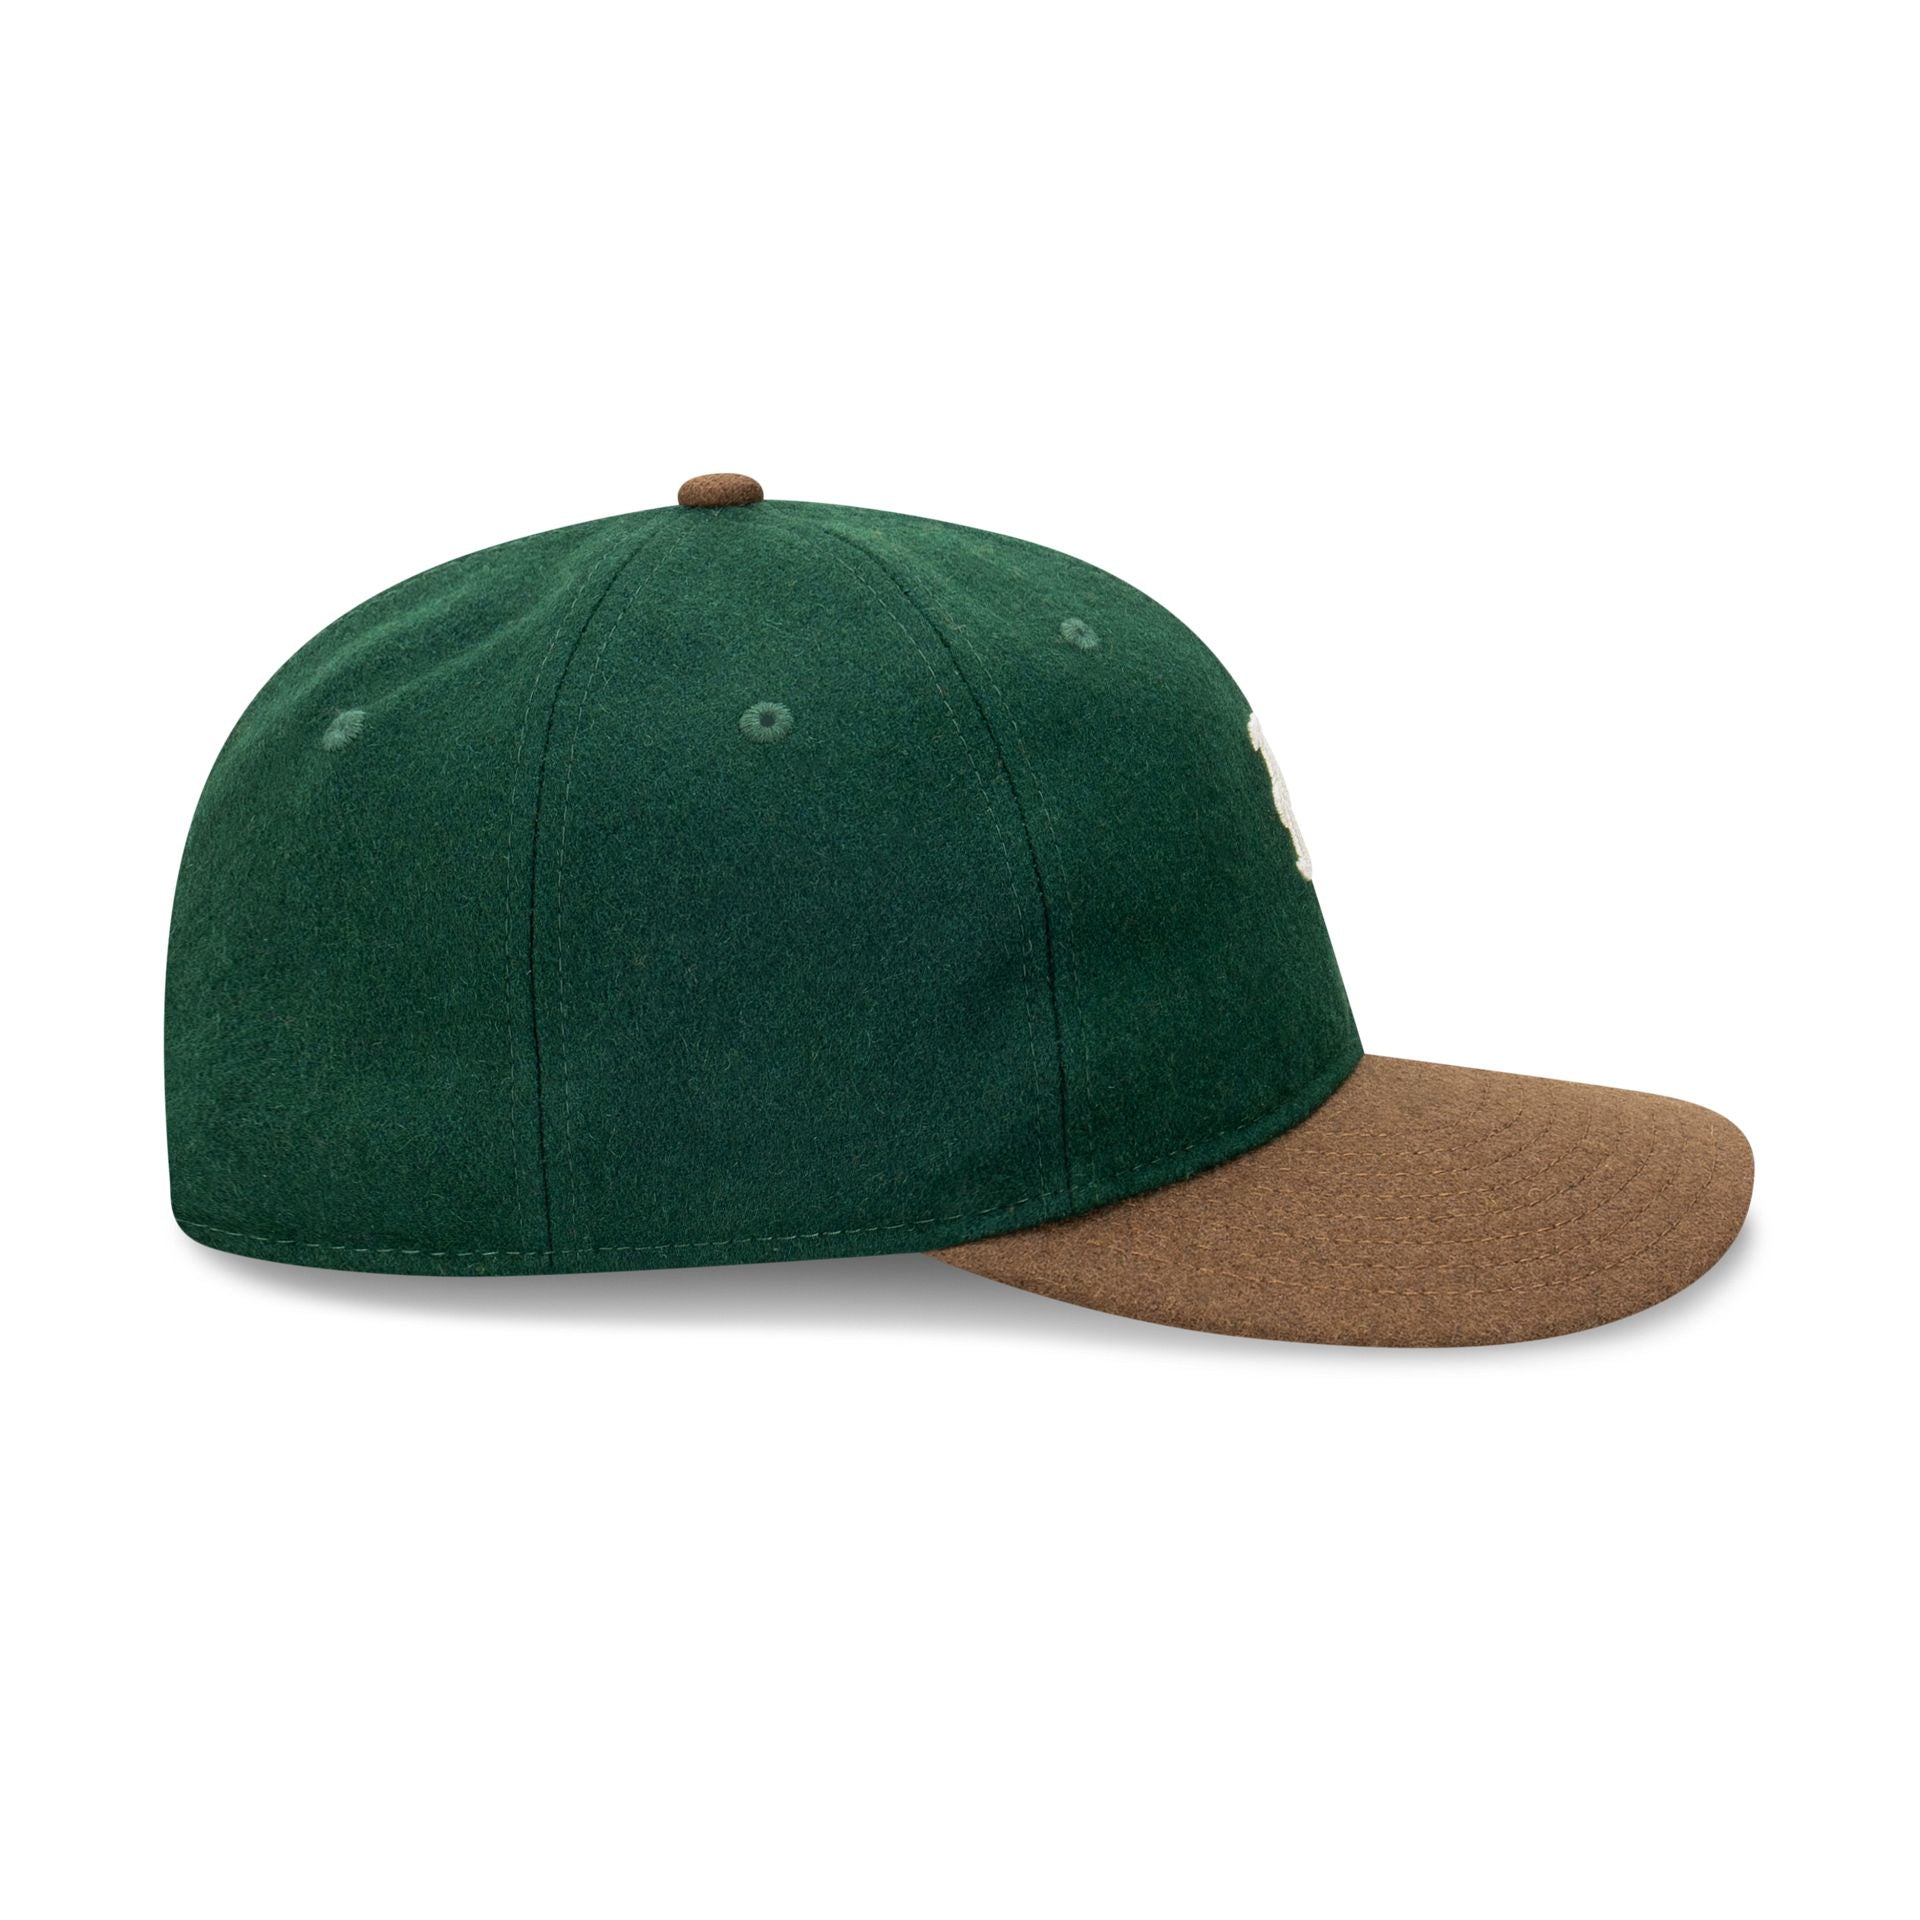 Retro Crown 9FIFTY Hats & Caps – New Era Cap Australia